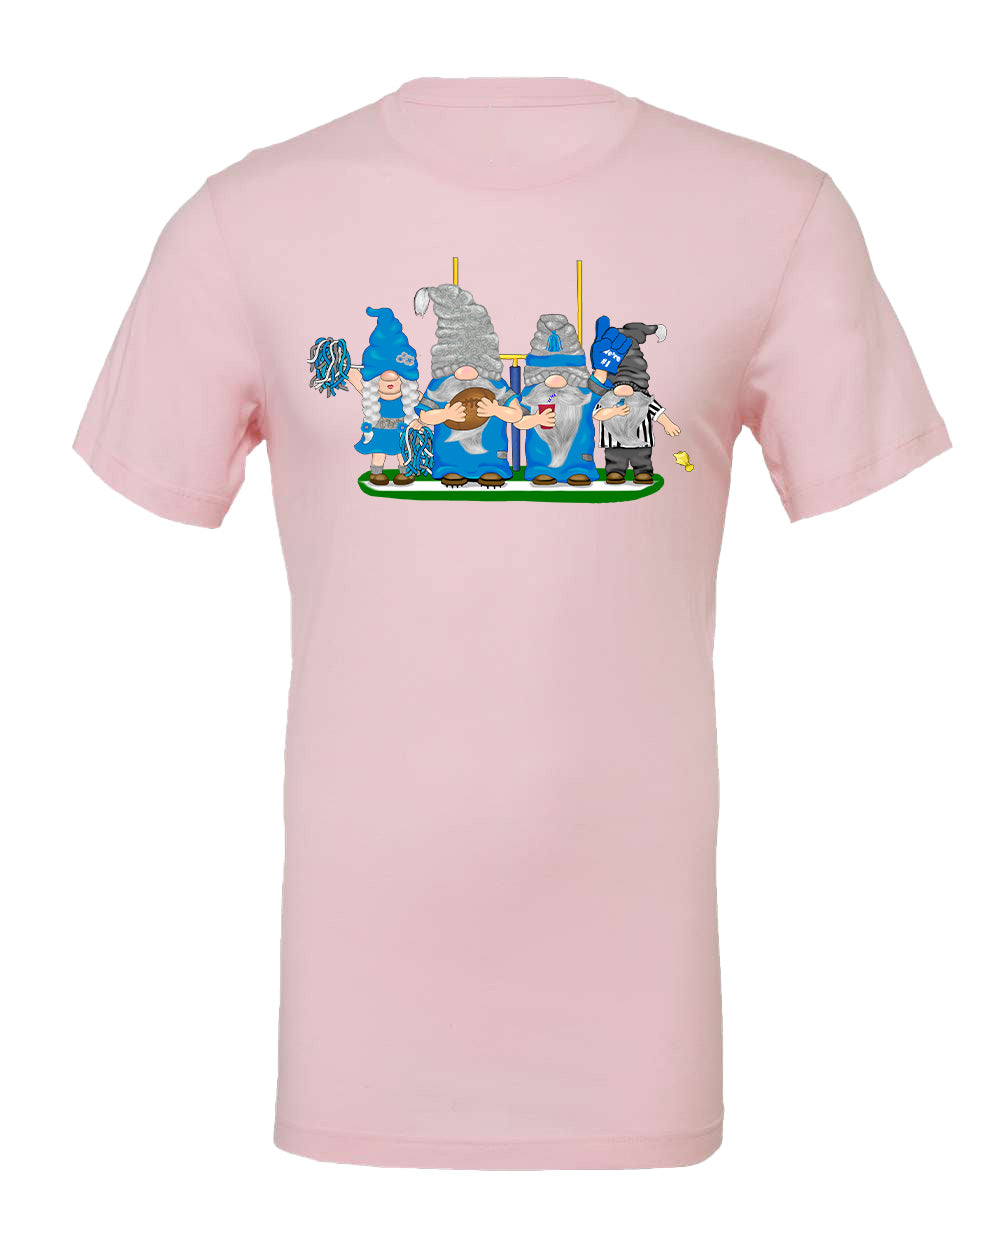 Blue & Gray Football Gnomes on Men's T-shirt (similar to Indianapolis)